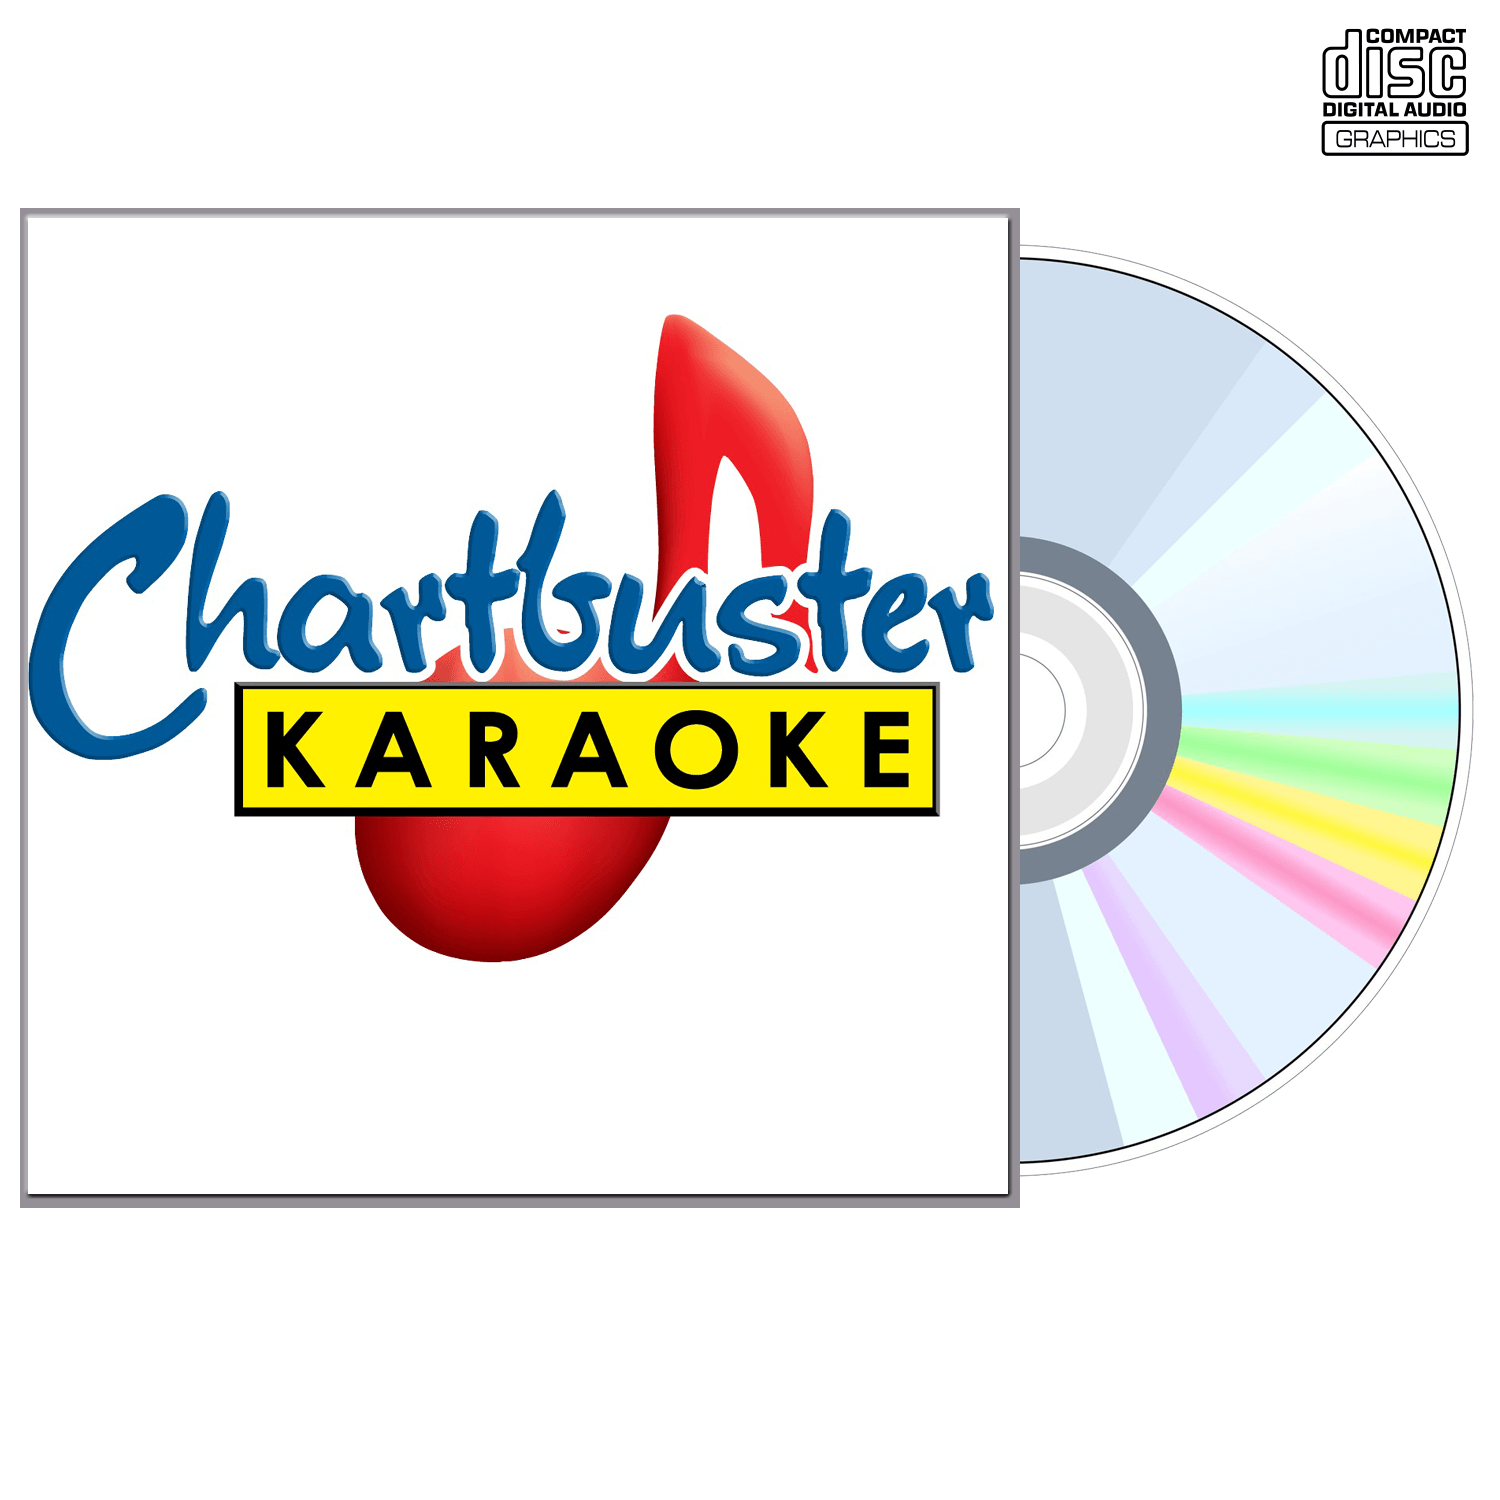 5th Dimension - CD+G - Chartbuster Karaoke - Karaoke Home Entertainment